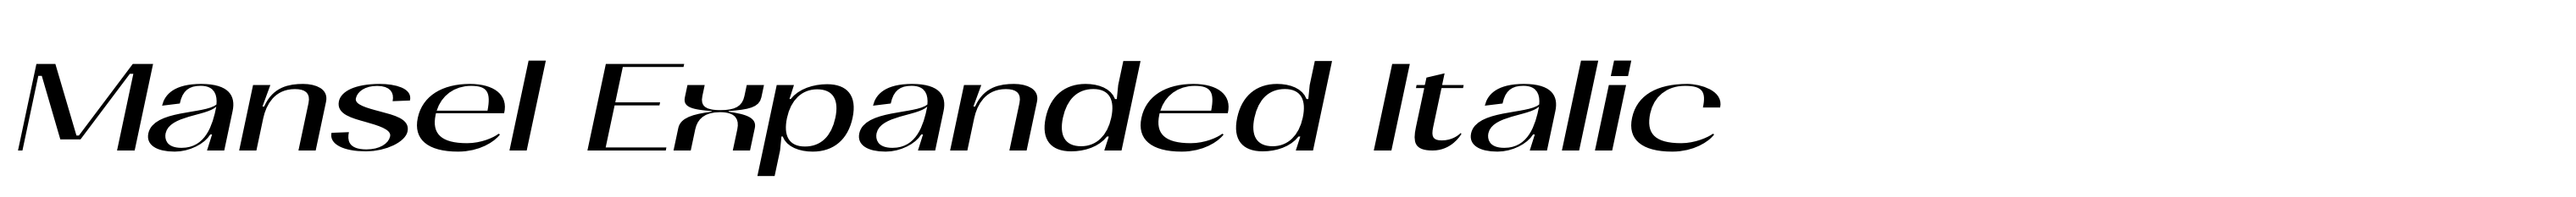 Mansel Expanded Italic